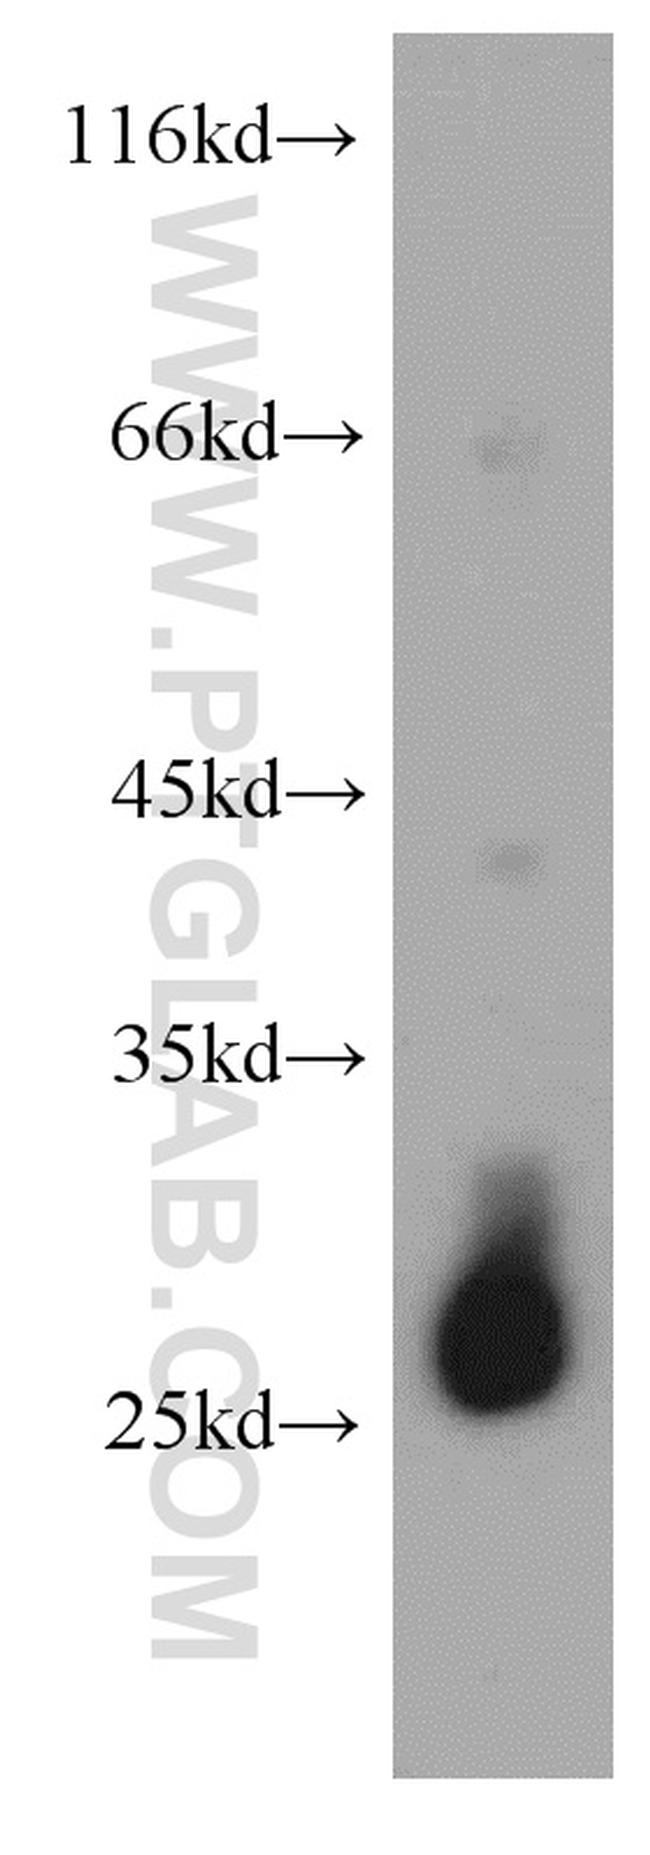 TMED9 Antibody in Western Blot (WB)